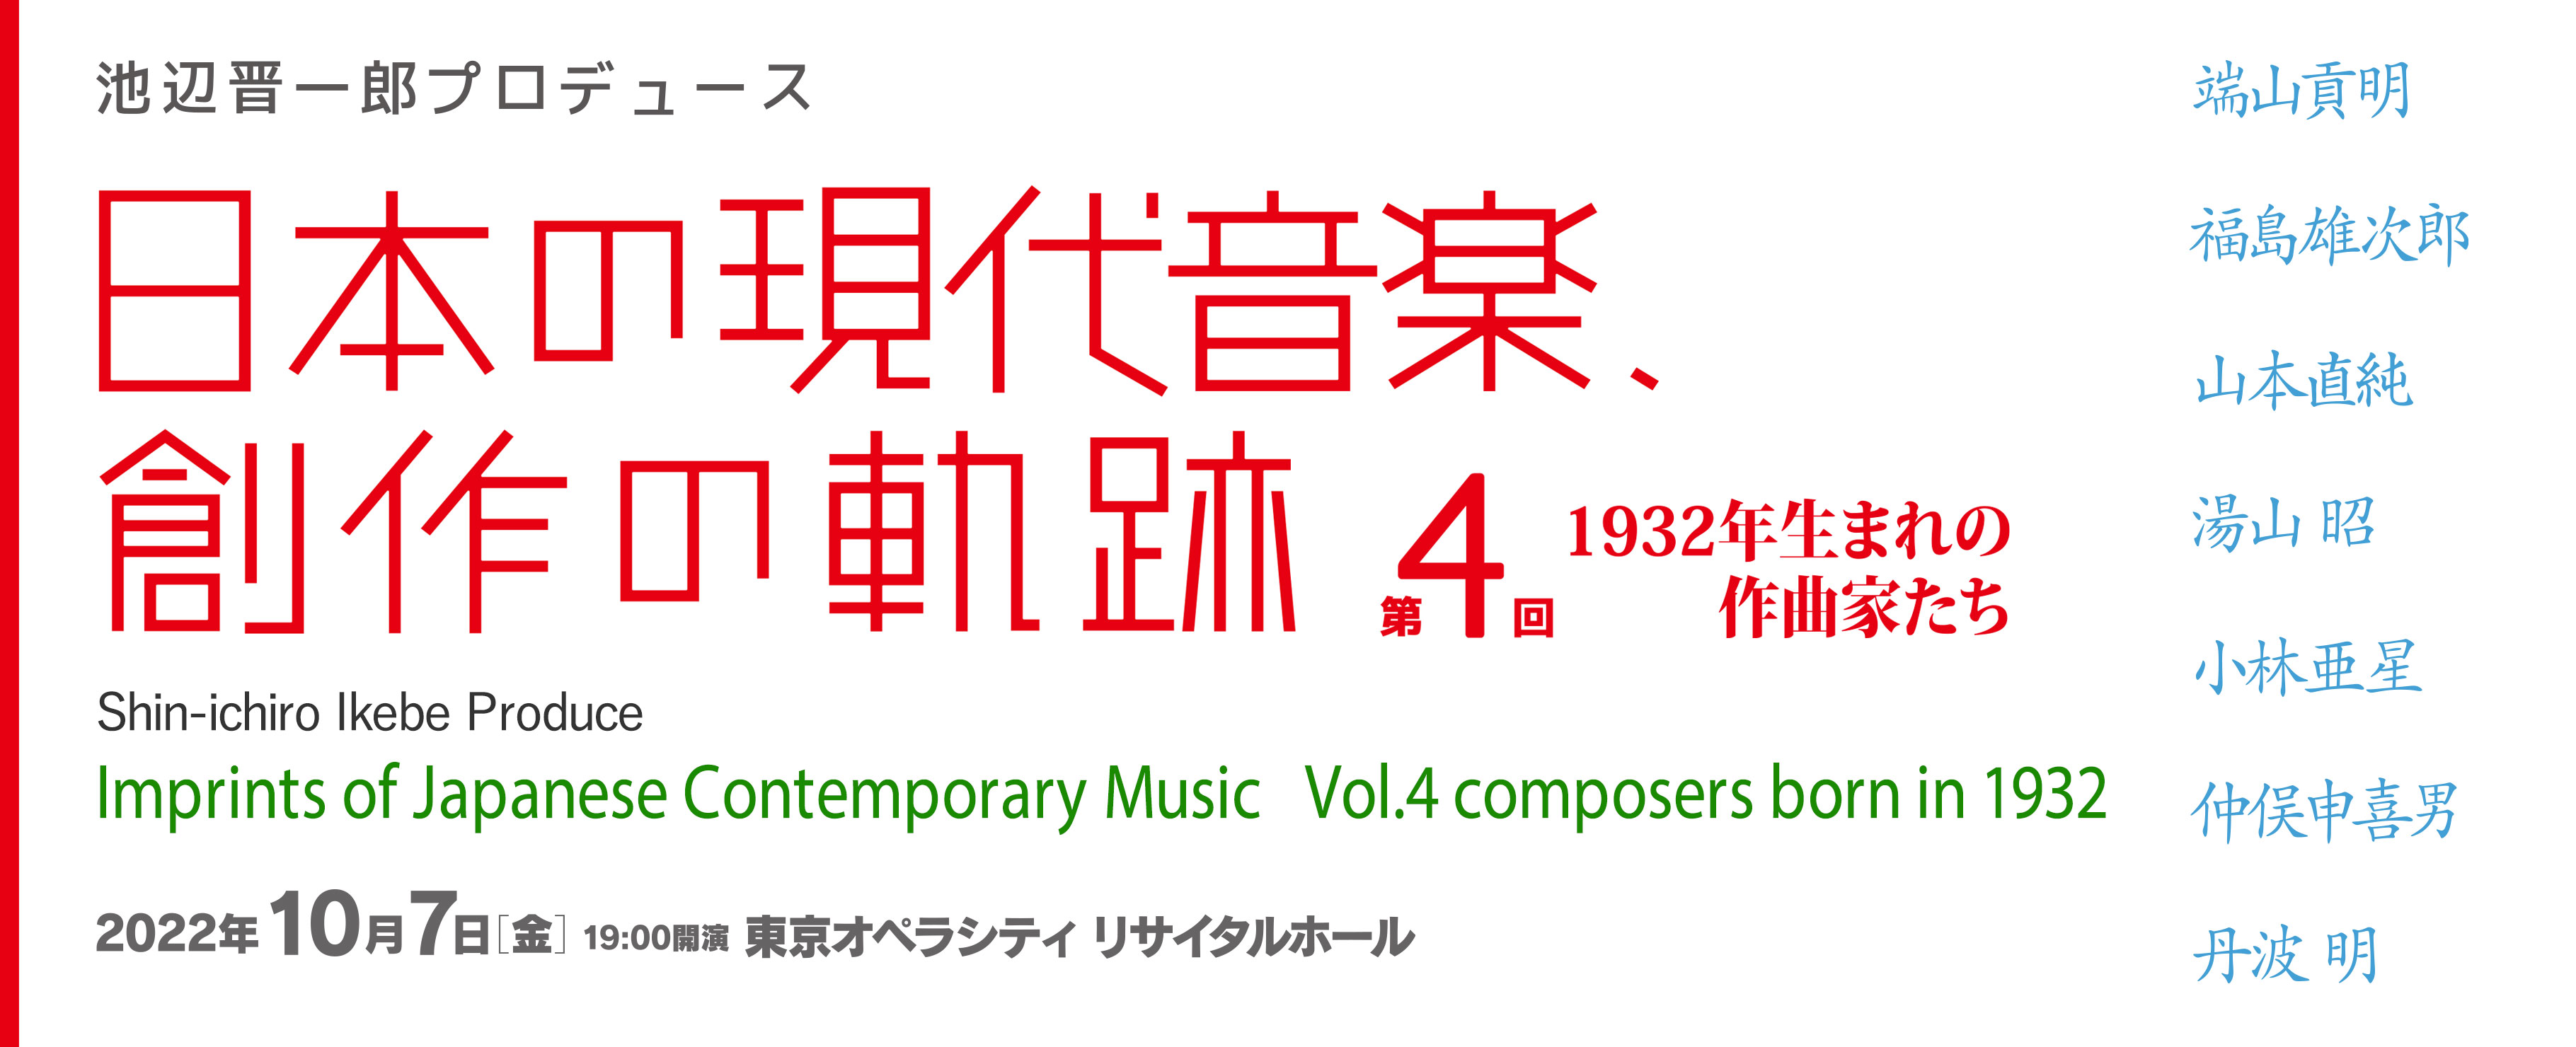 Shin-ichiro Ikebe Produce Imprints of Japanese Contemporary Music